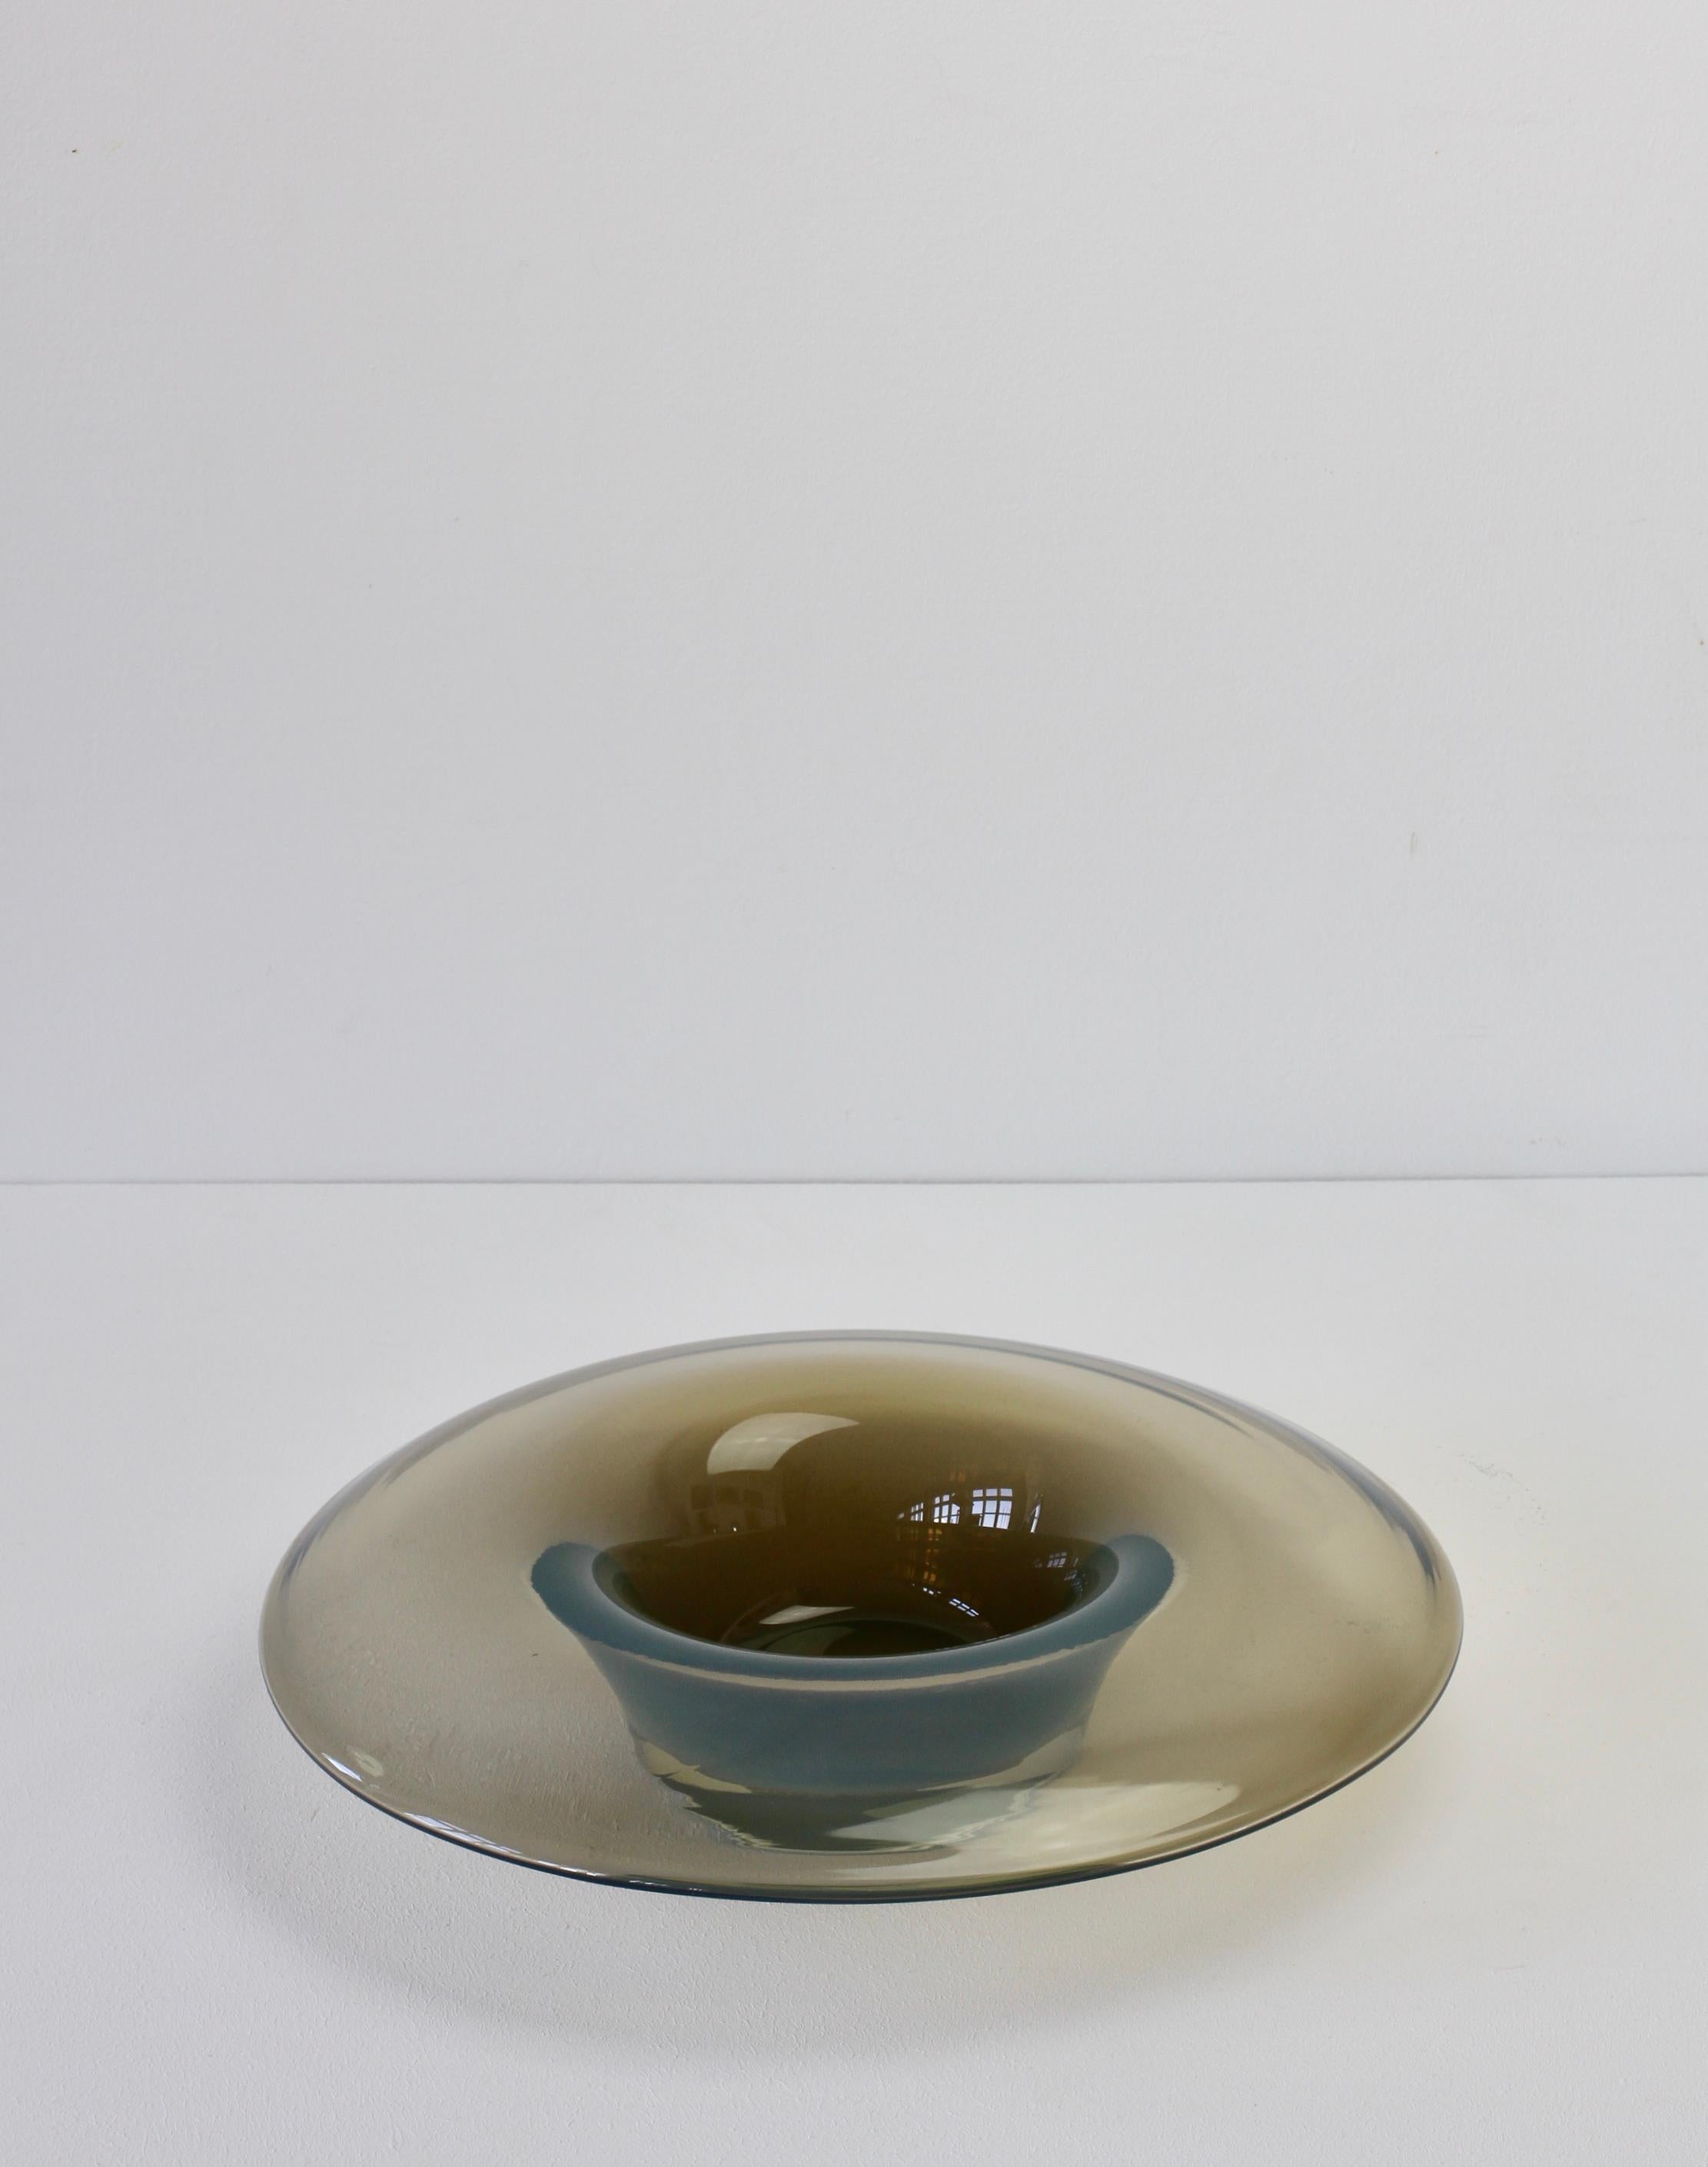 Antonio da Ros for Cenedese Vintage Italian Murano Opaline Glass Serving Bowl 9